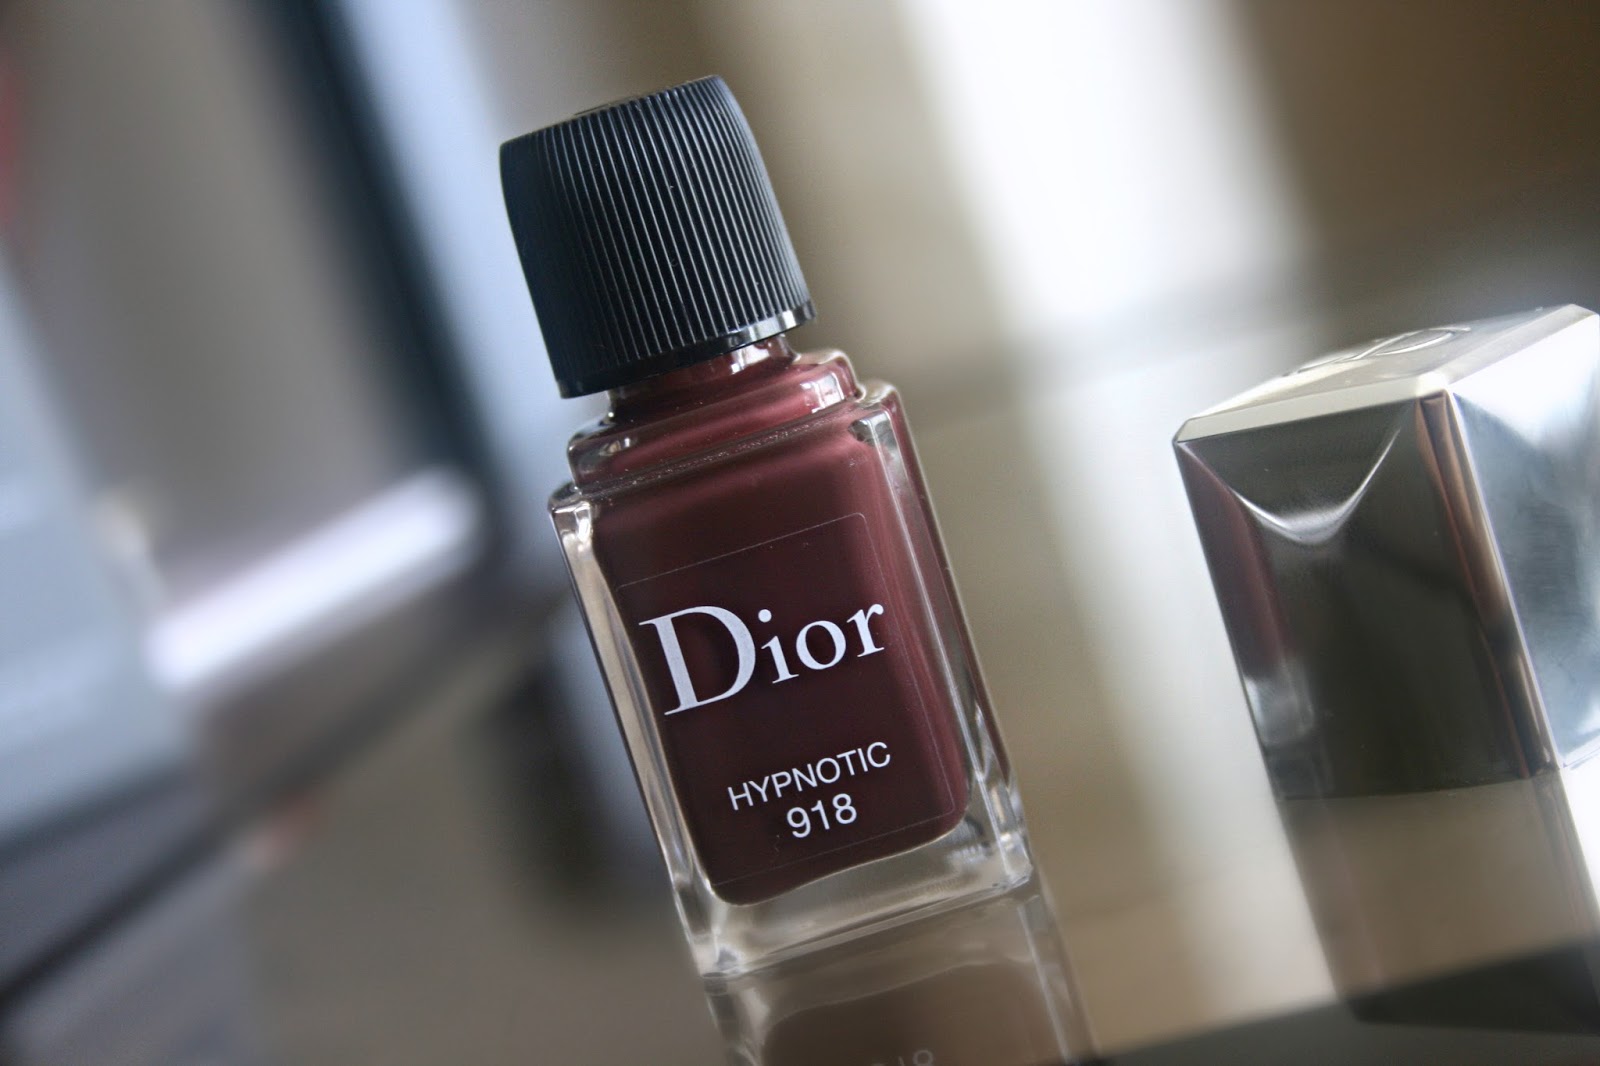 Dior Vernis Hypnotic #918 review, photos & swatches